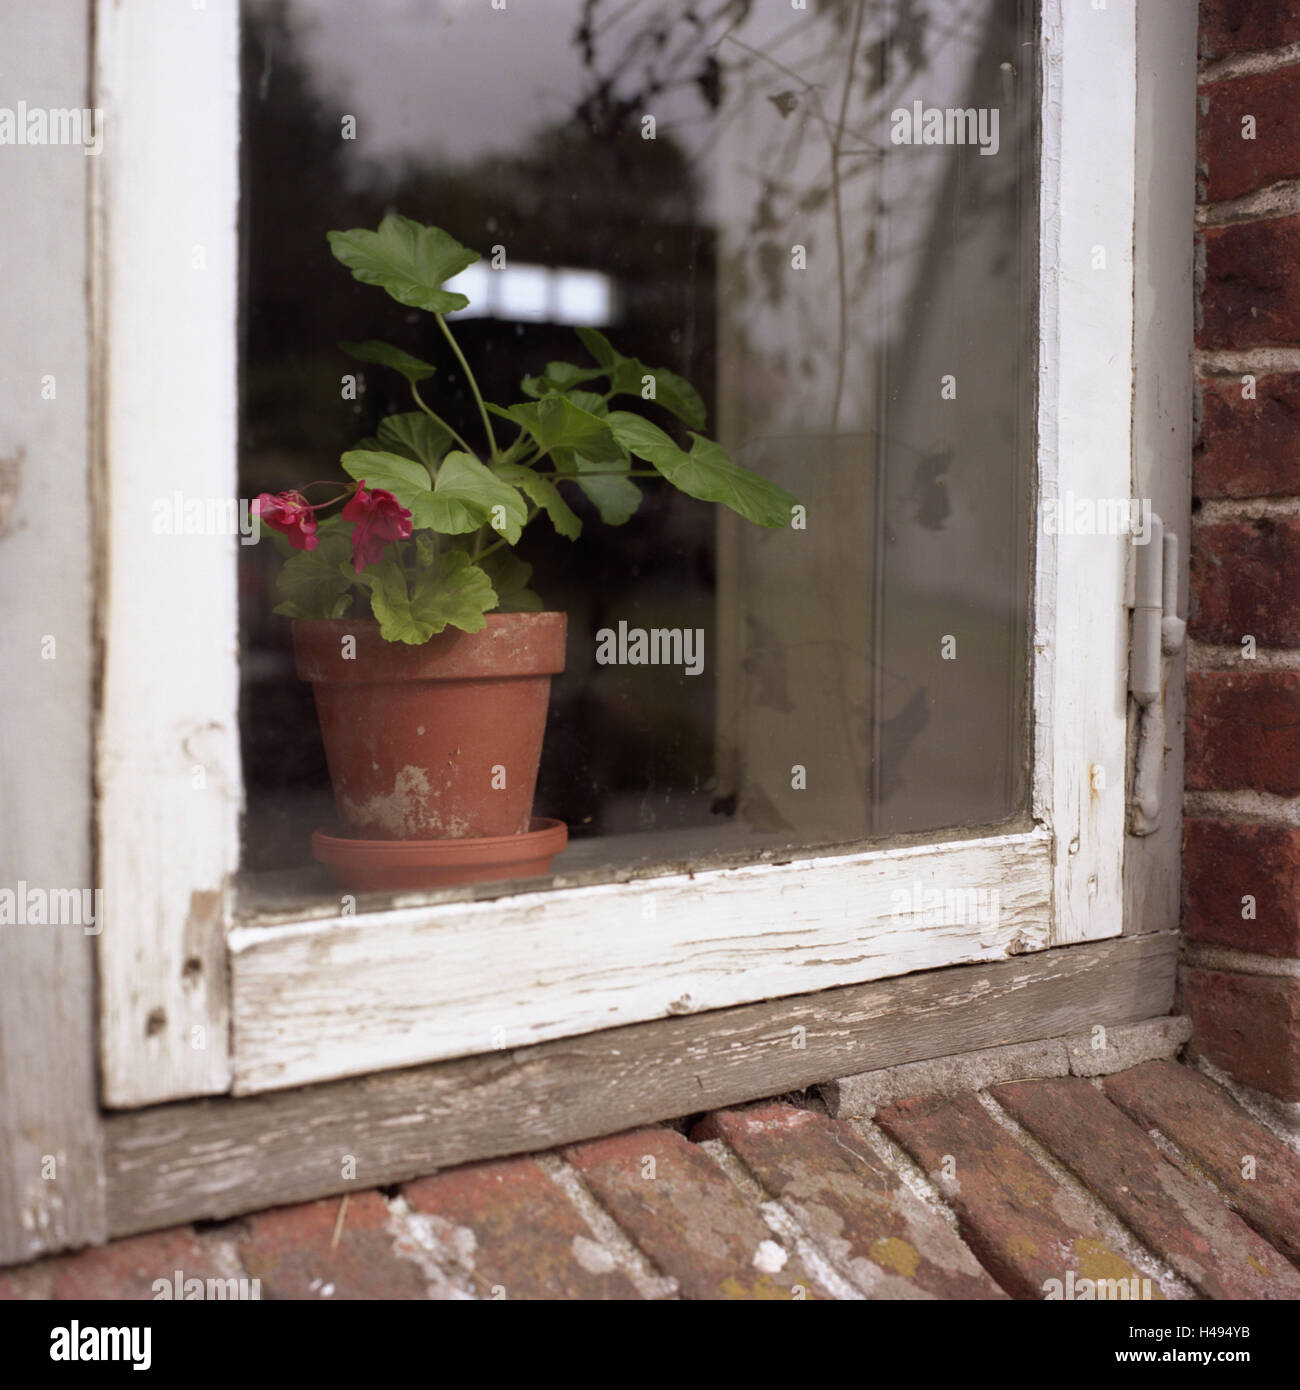 Building, old, detail, window, flower pot, Stock Photo